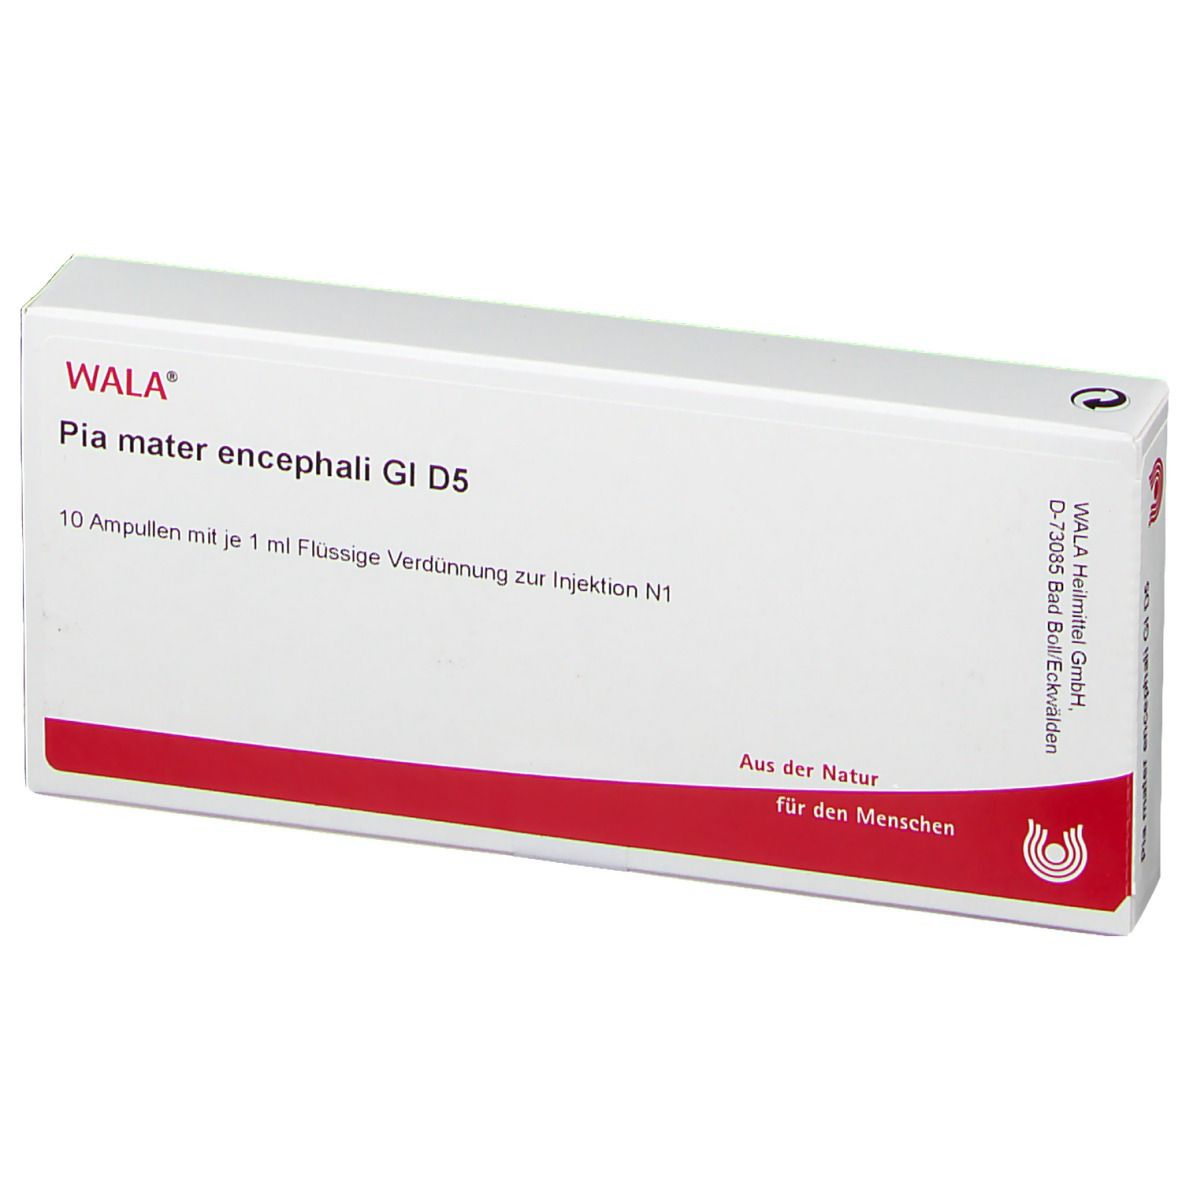 WALA® Pia mater encephali Gl D 5